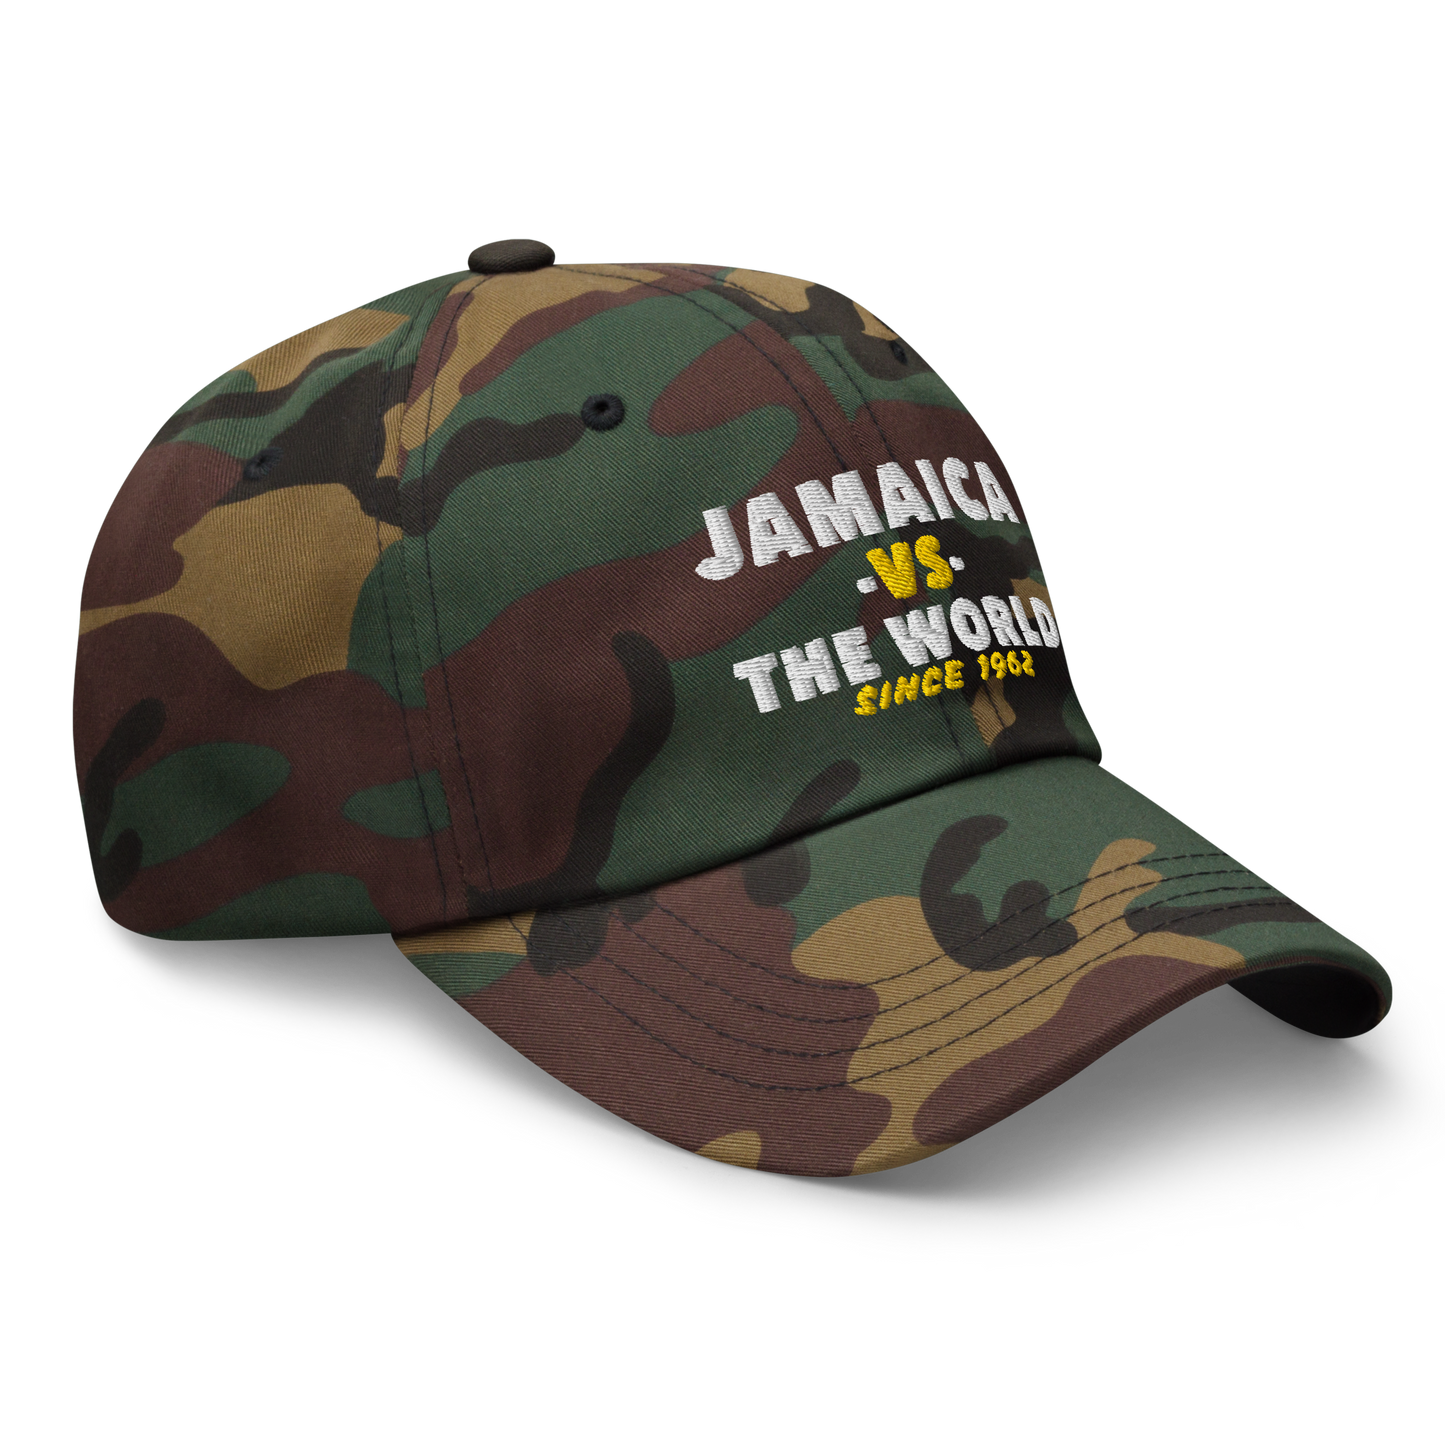 Jamaica -vs- The World Dad hat